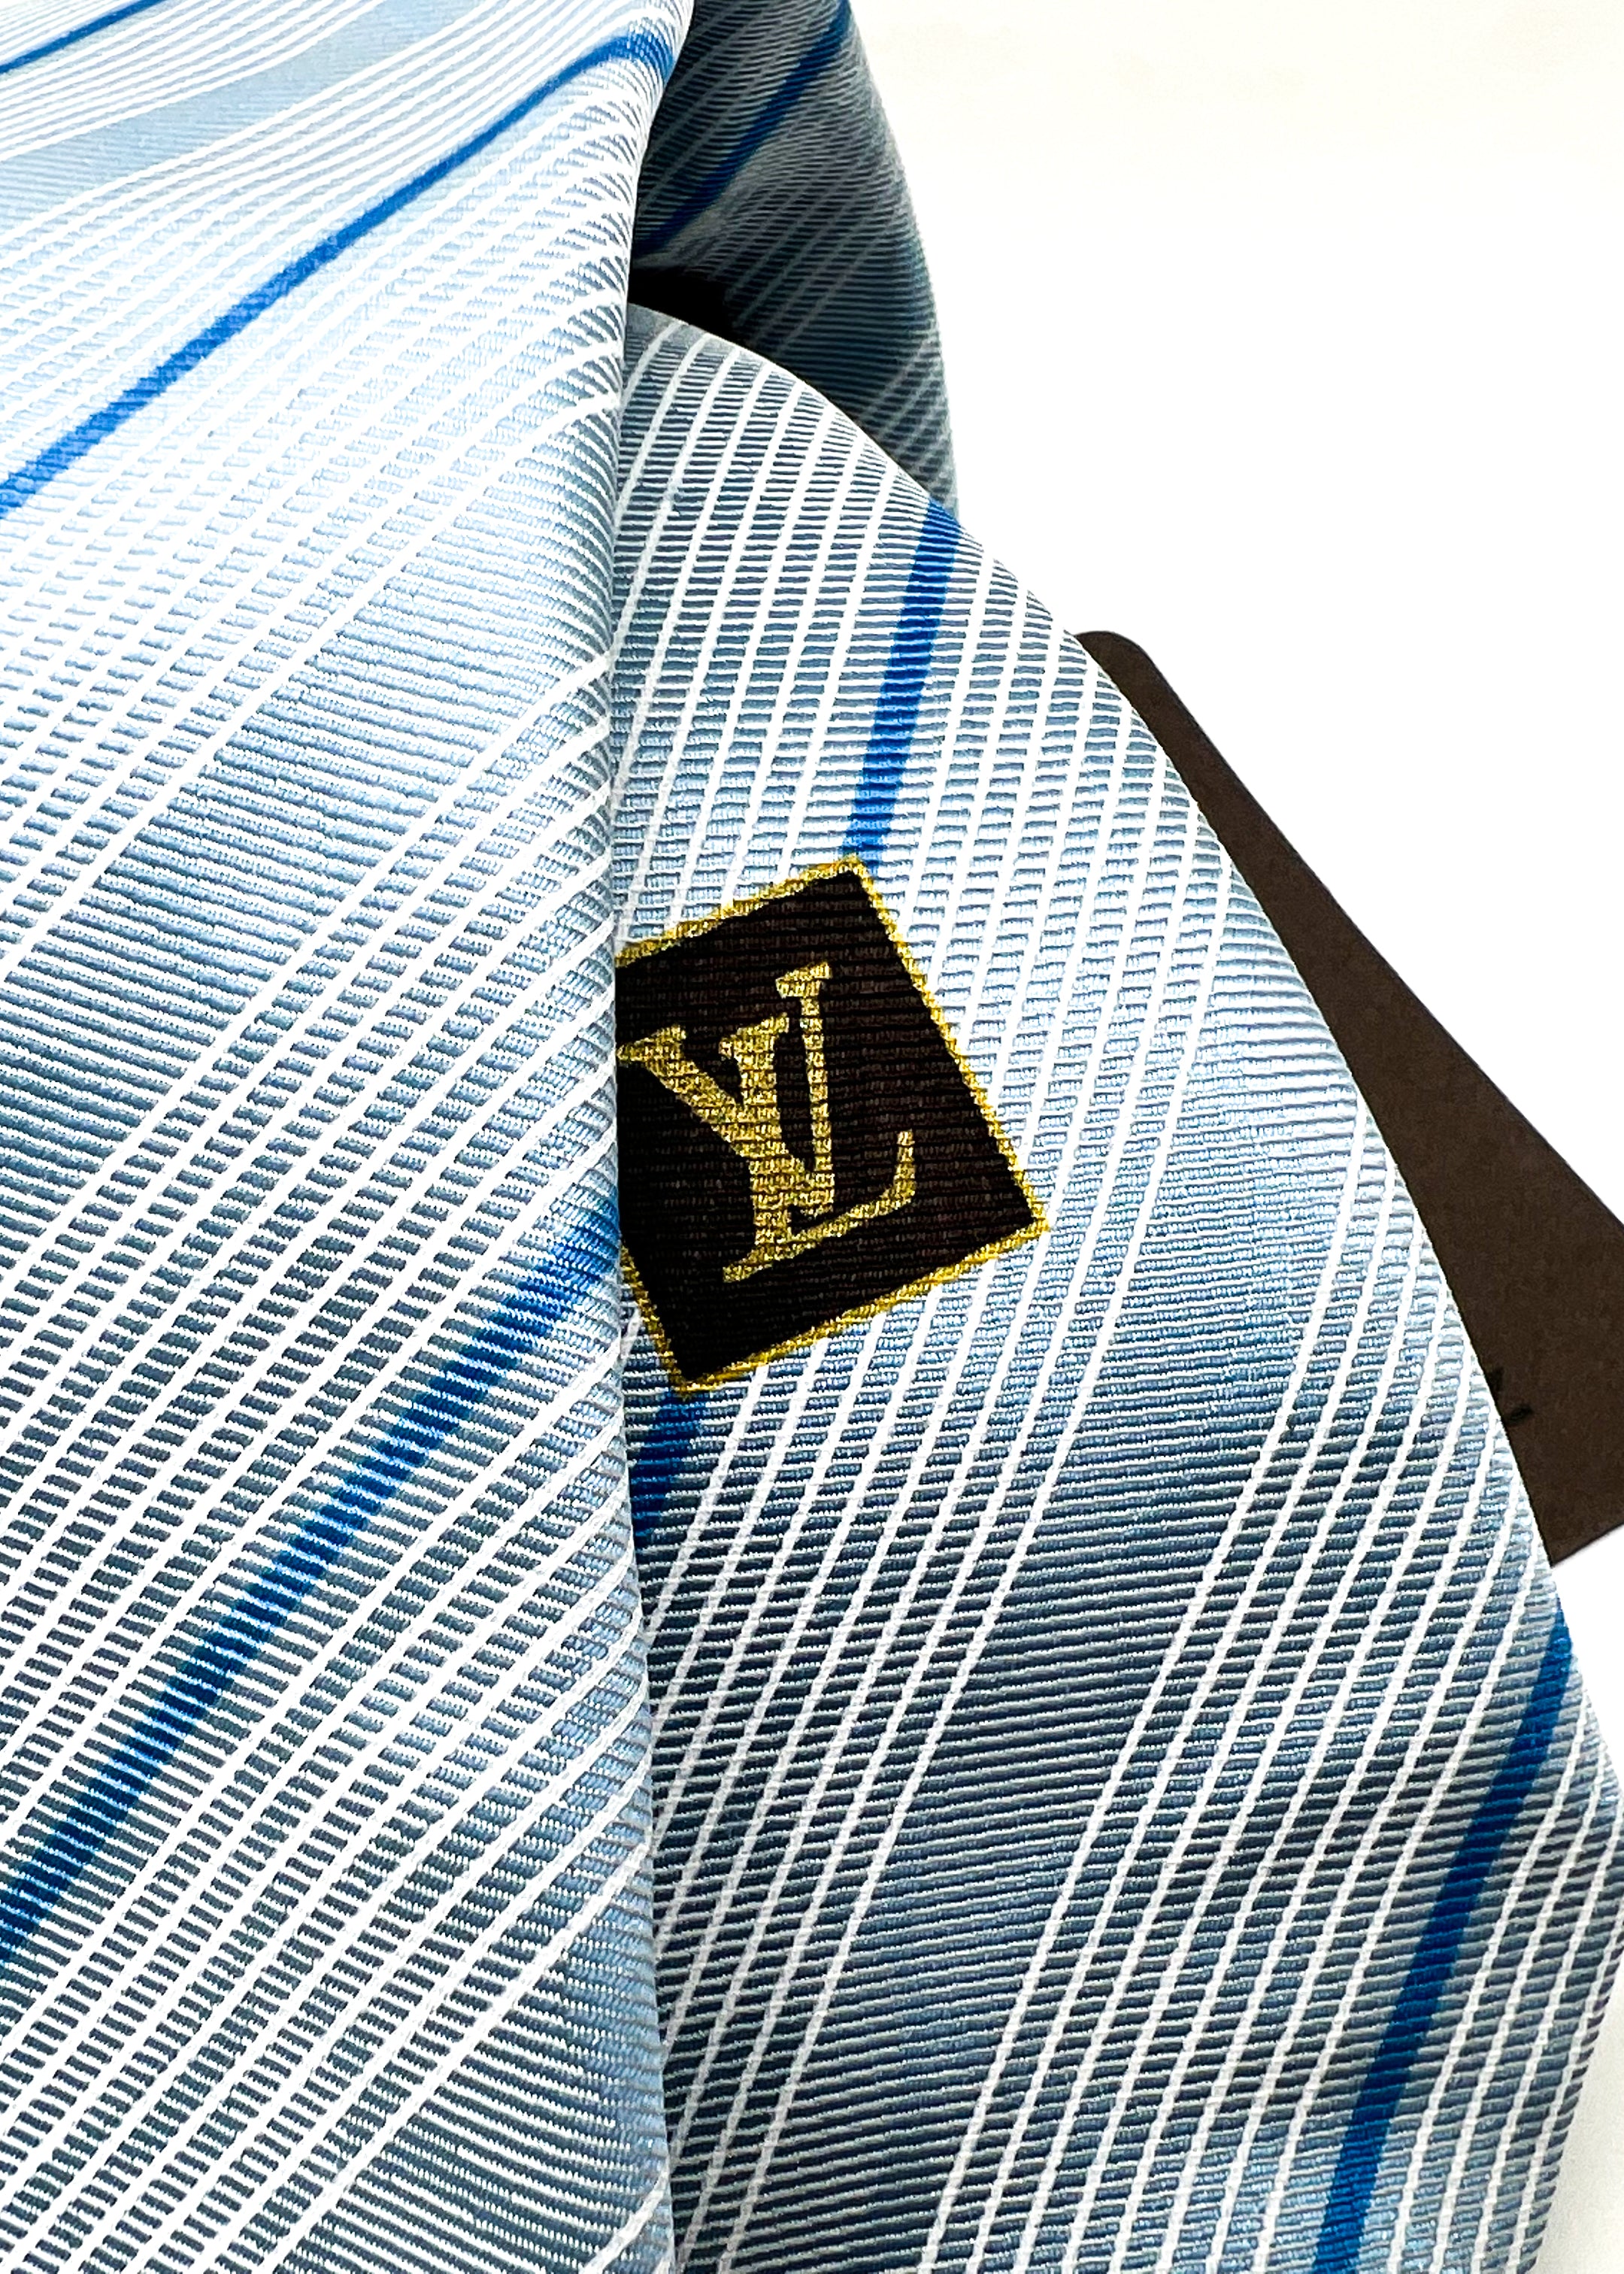 Louis Vuitton Tie Silk 100 % , lv monogram Tie , Red Lv Tie